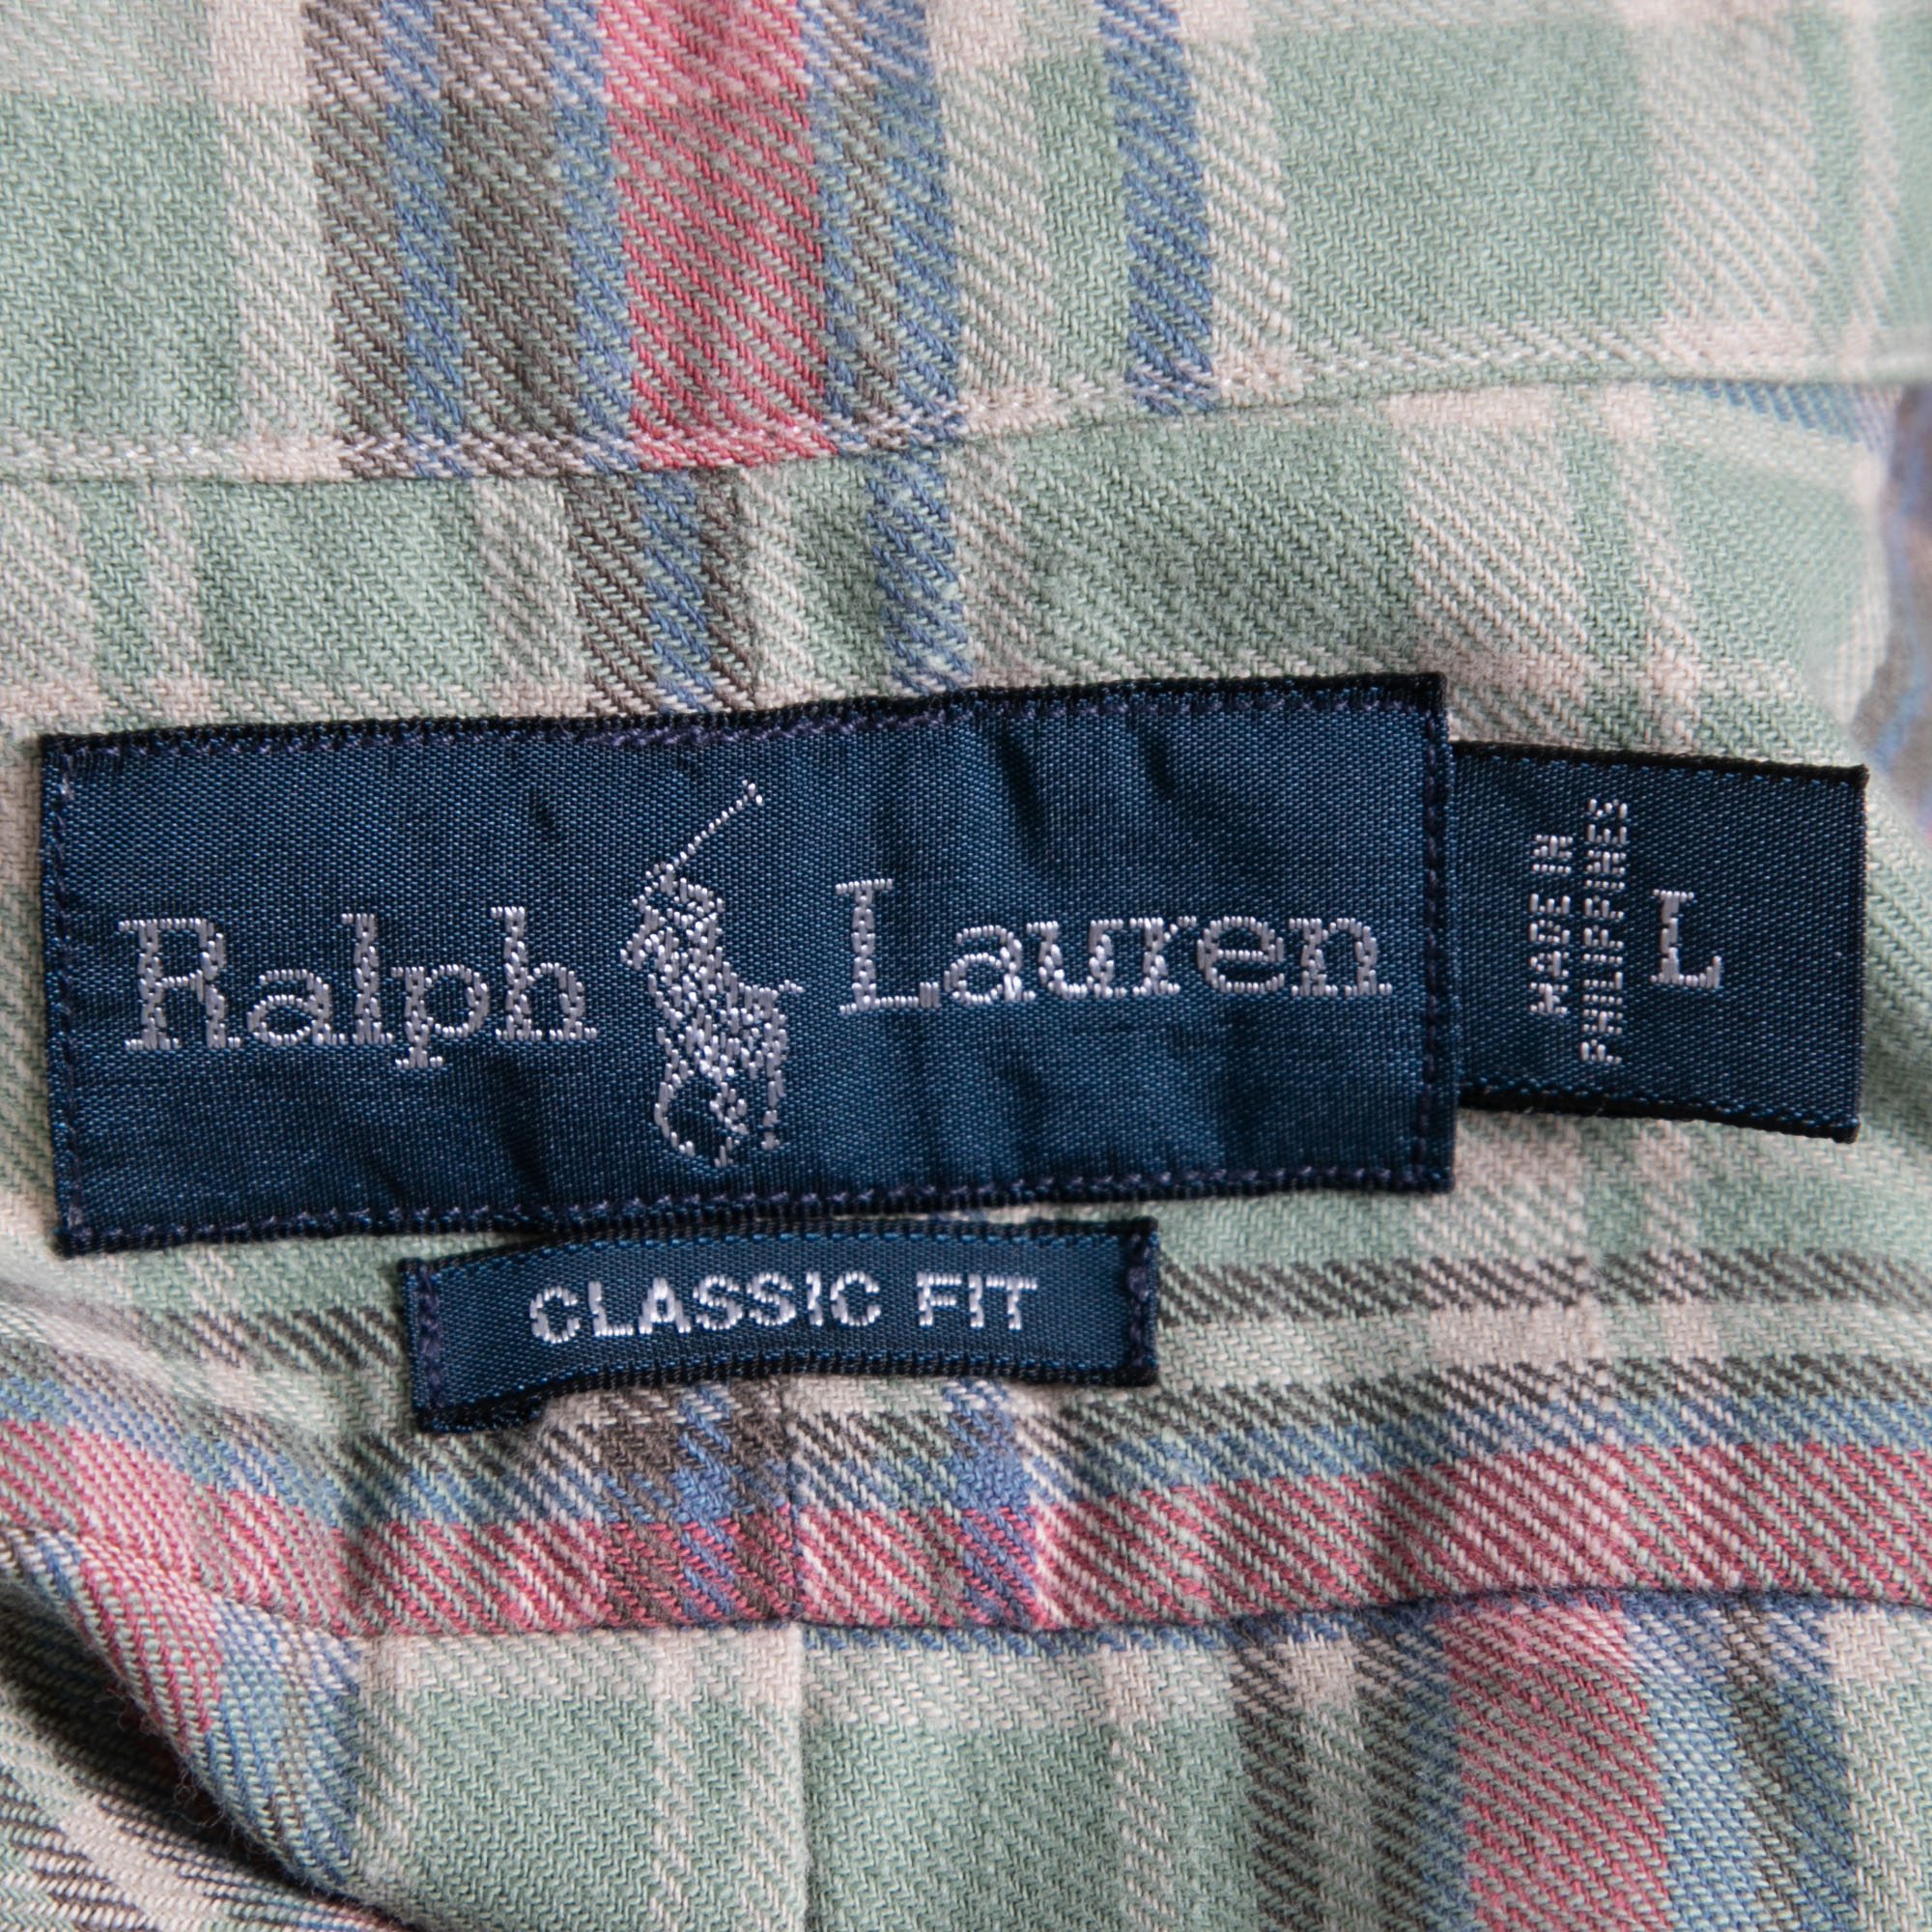 Ralph Lauren Green Checked Cotton Button Front Classic Fit Shirt L